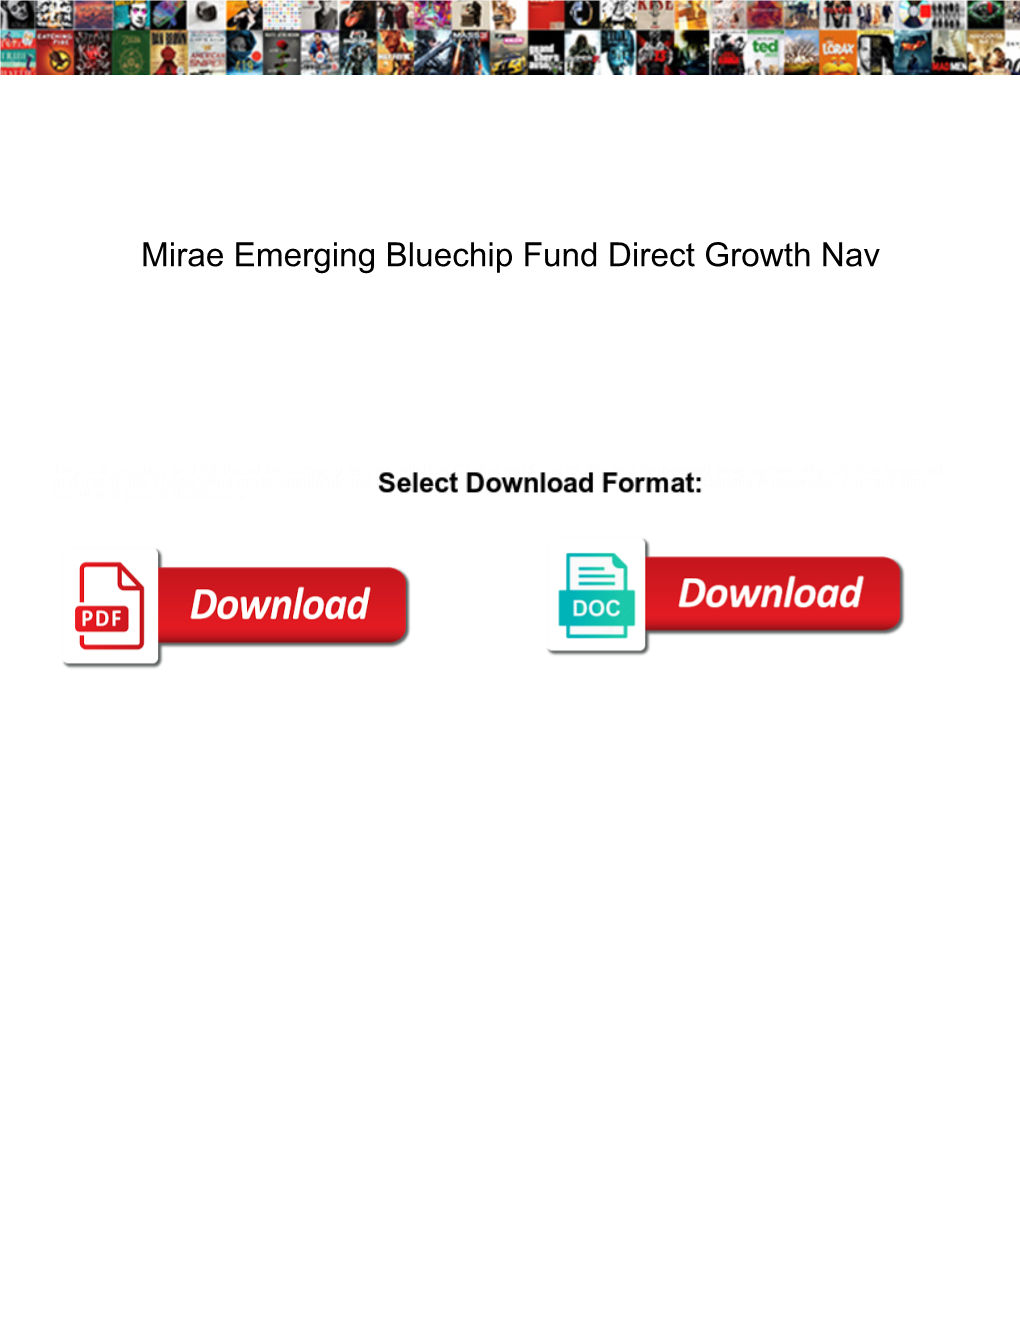 Mirae Emerging Bluechip Fund Direct Growth Nav